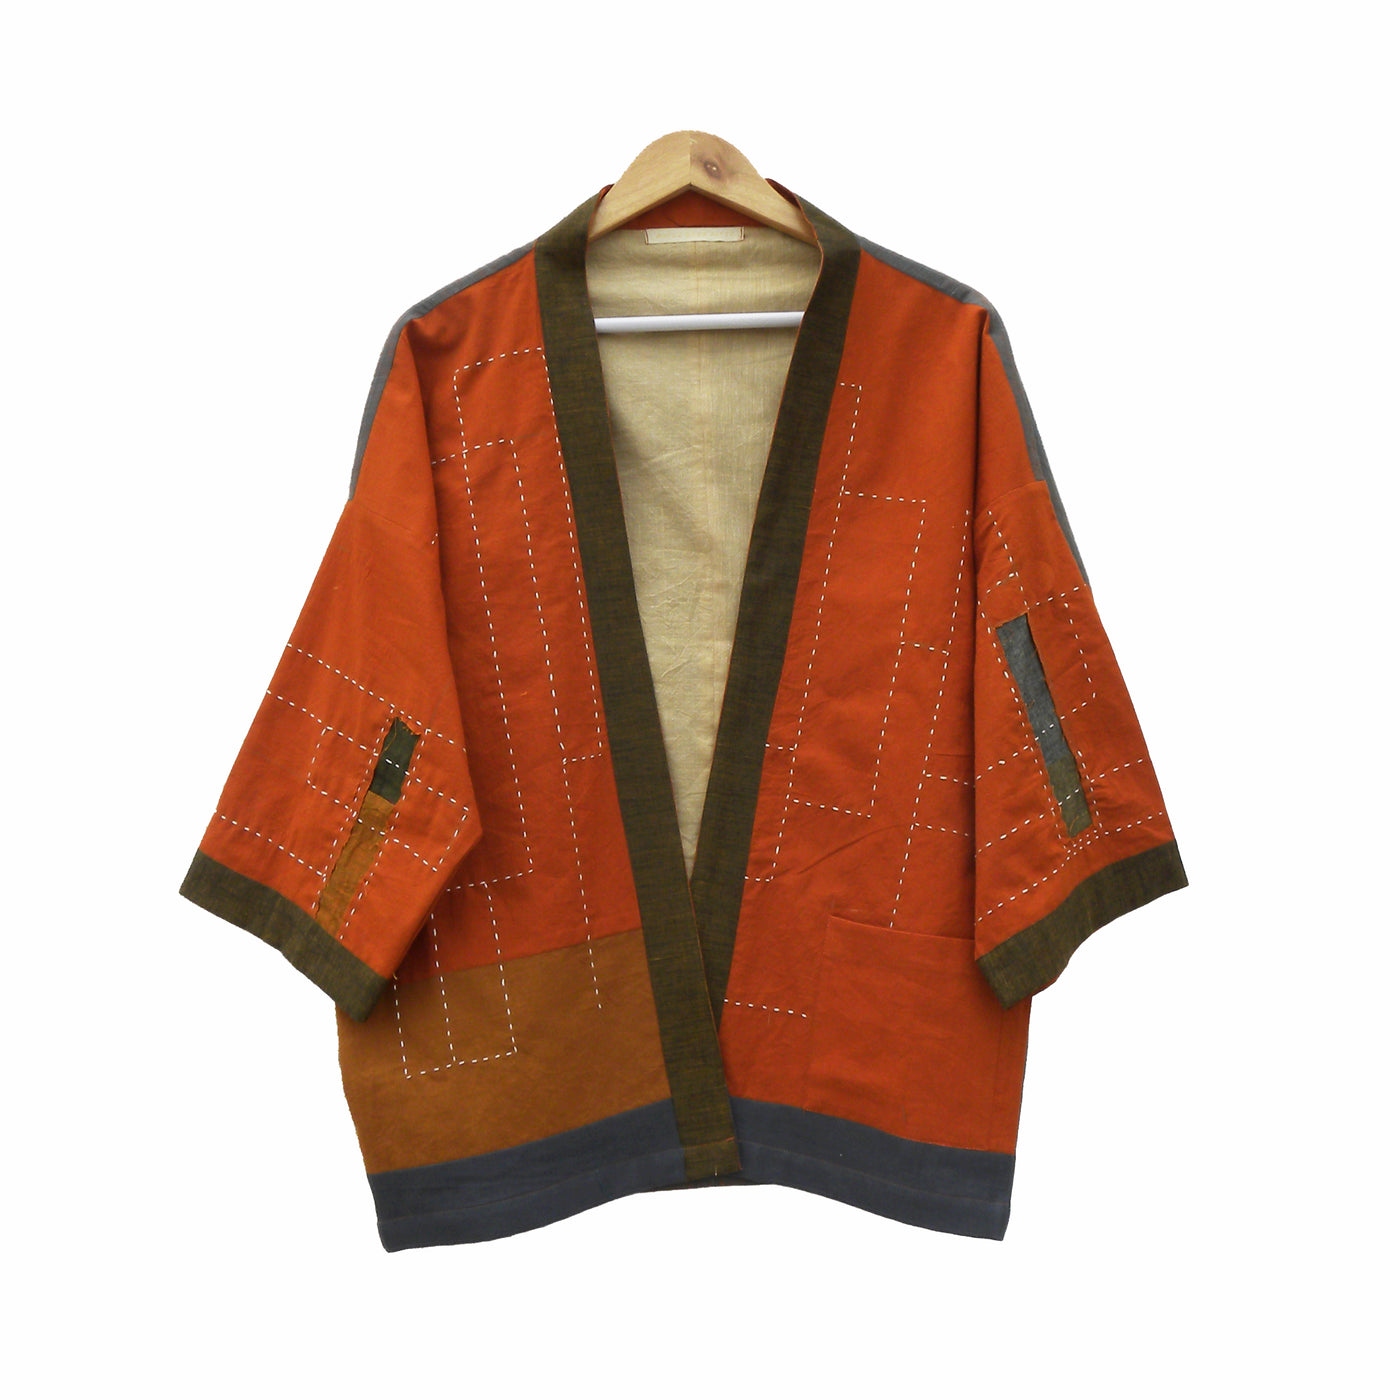 A versatile jacket in a brick orange colour